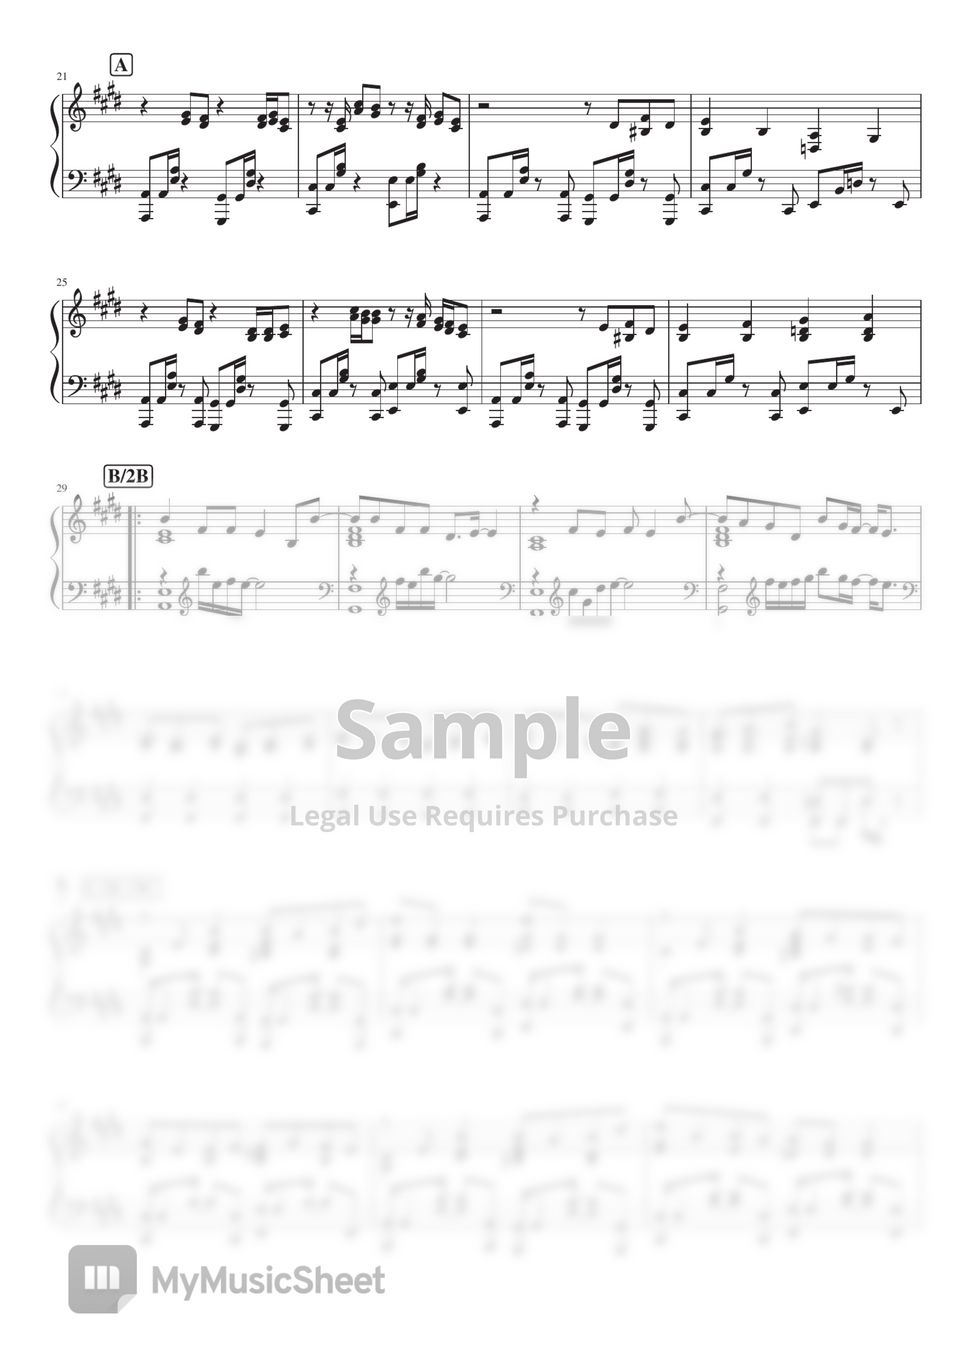 R Sound Design - flos (PianoSolo) by 深根／Fukane